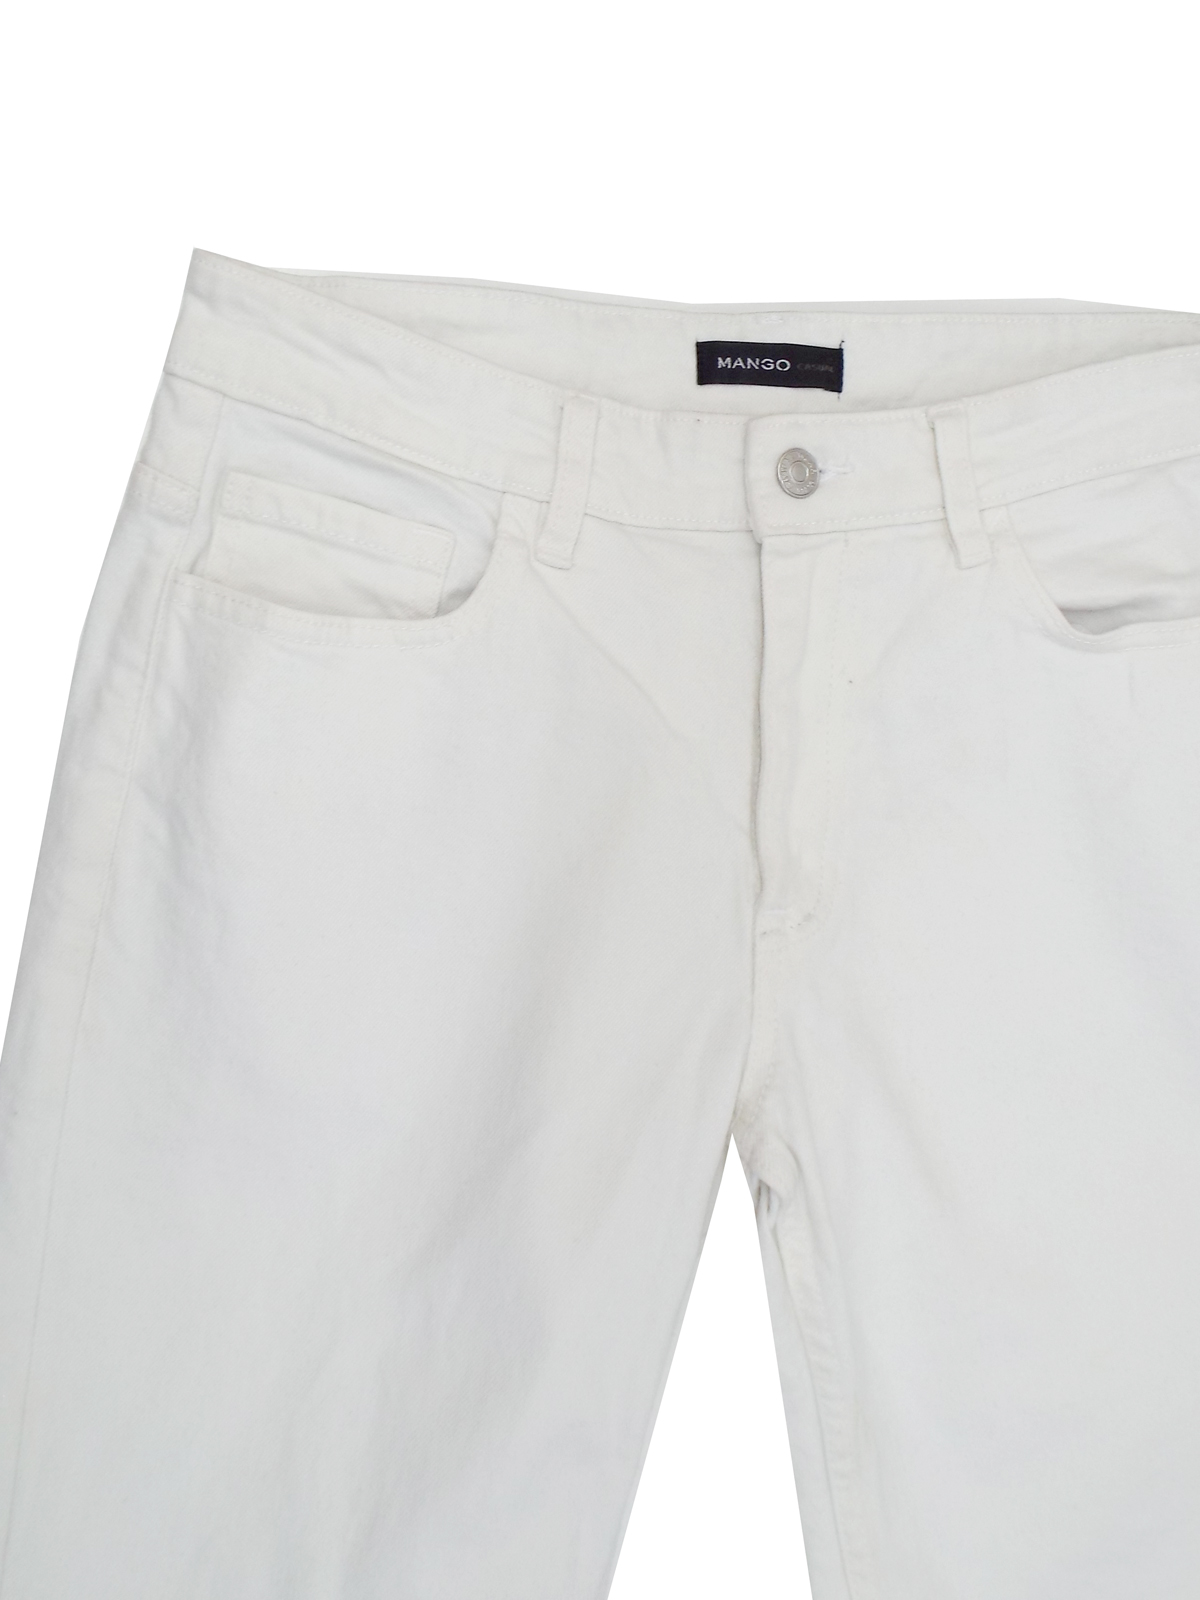 M4ngo WHITE Cotton Rich 5-Pocket Denim Shorts - Waist Size 30 to 36